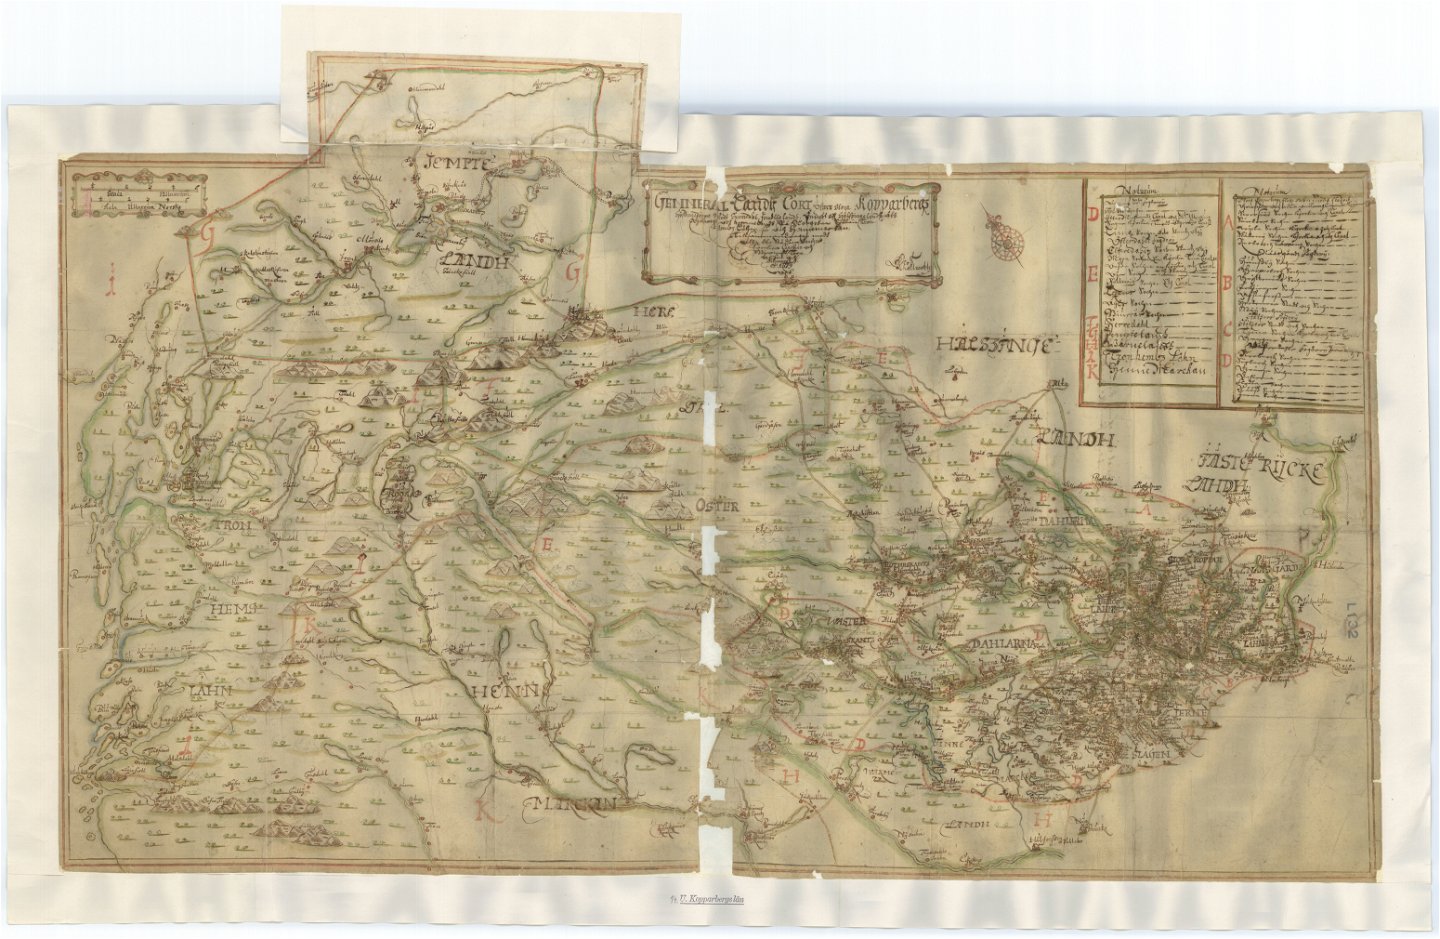 Schallrooths karta från 1679, över St Kopperbergs höftigedöme